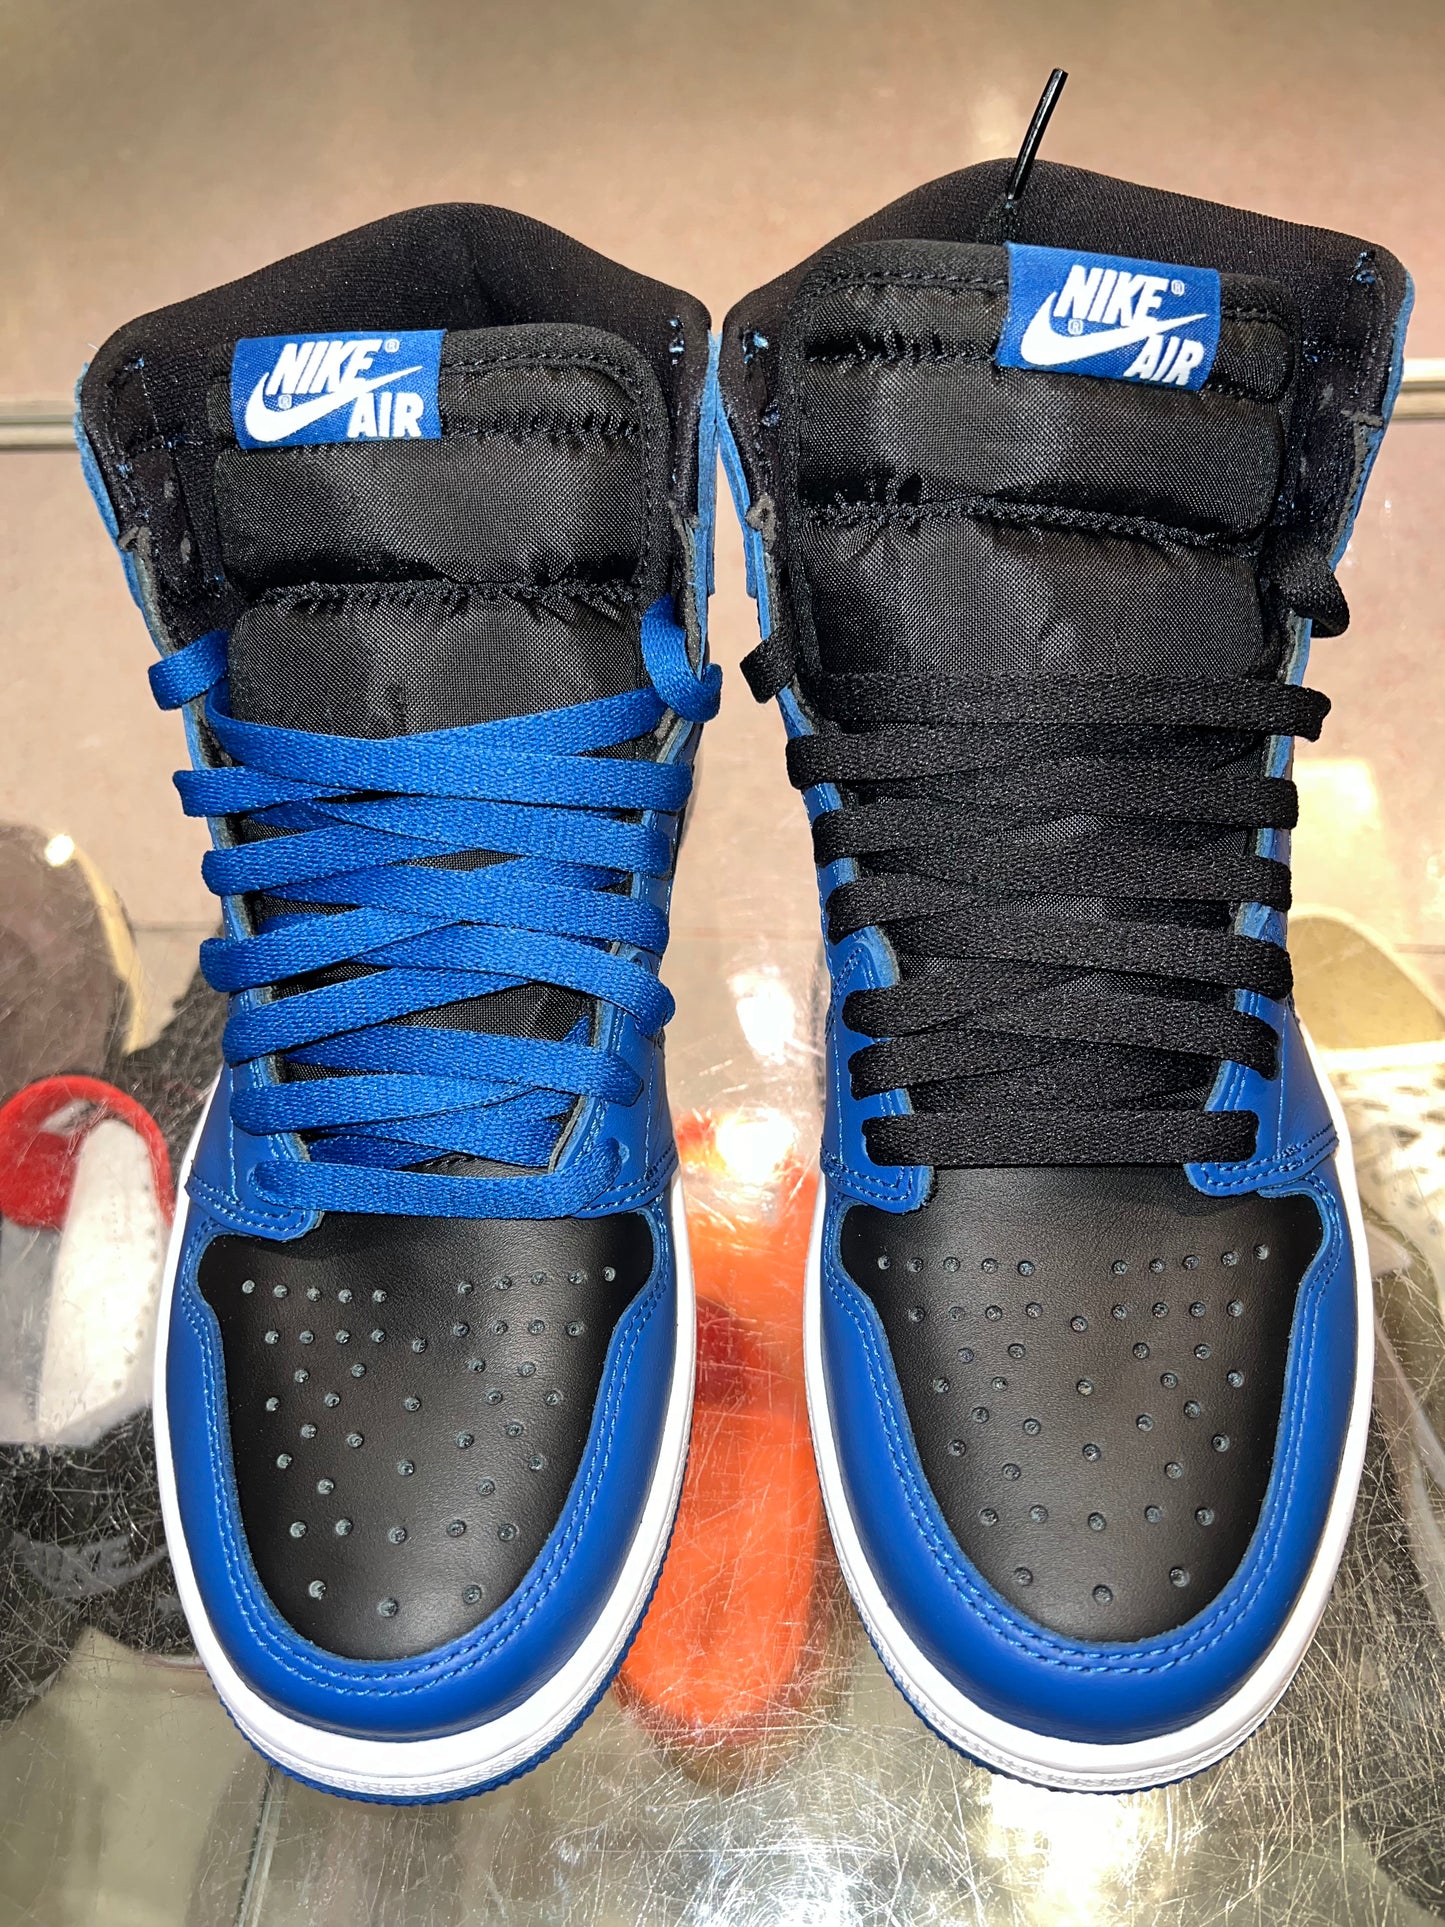 Size 8.5 Air Jordan 1 “Dark Marina Blue” (Mall)